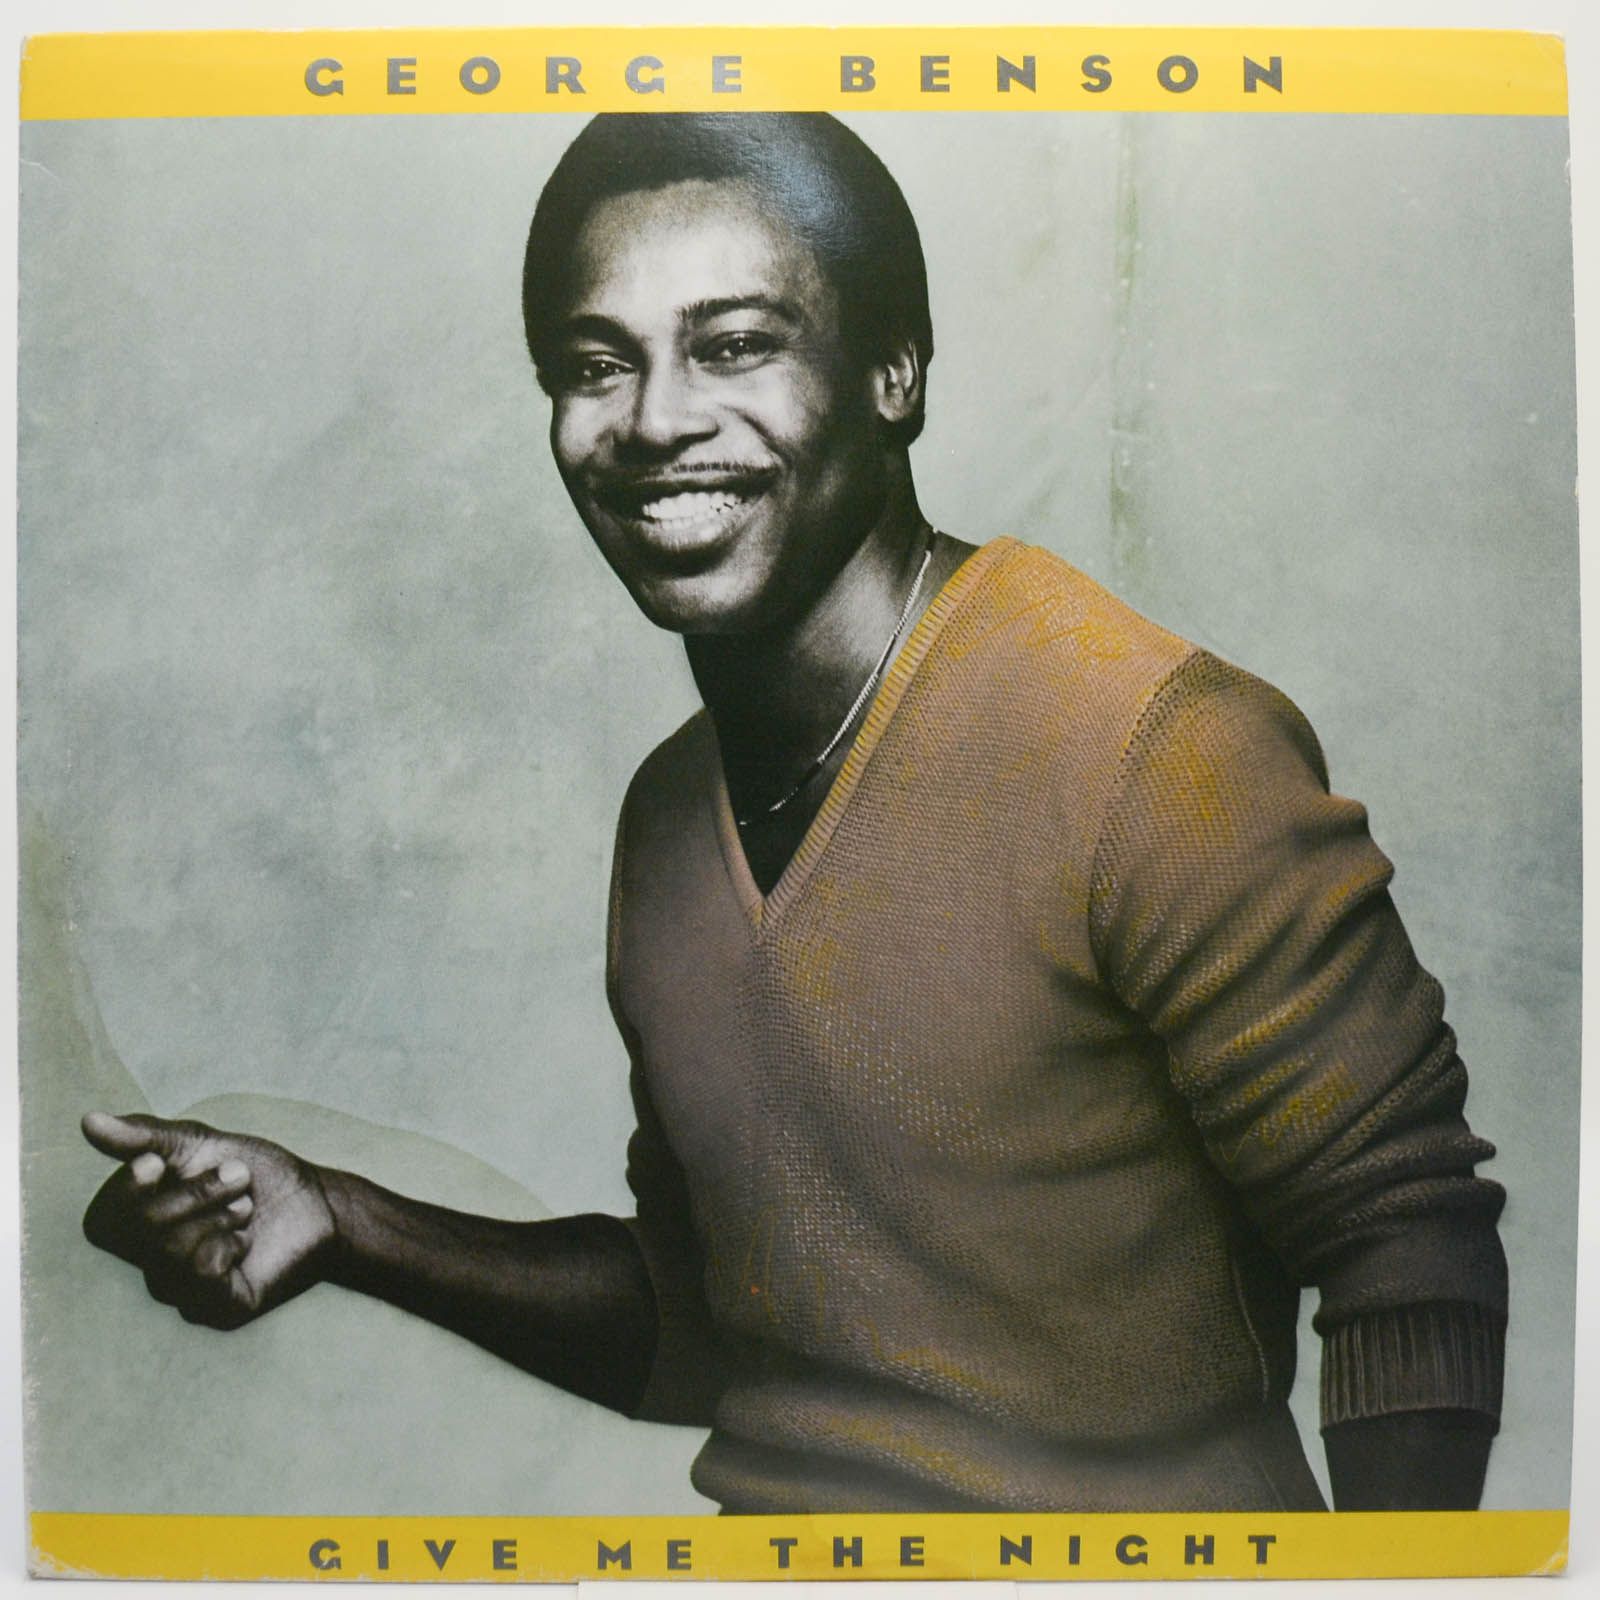 George Benson — Give Me The Night, 1980